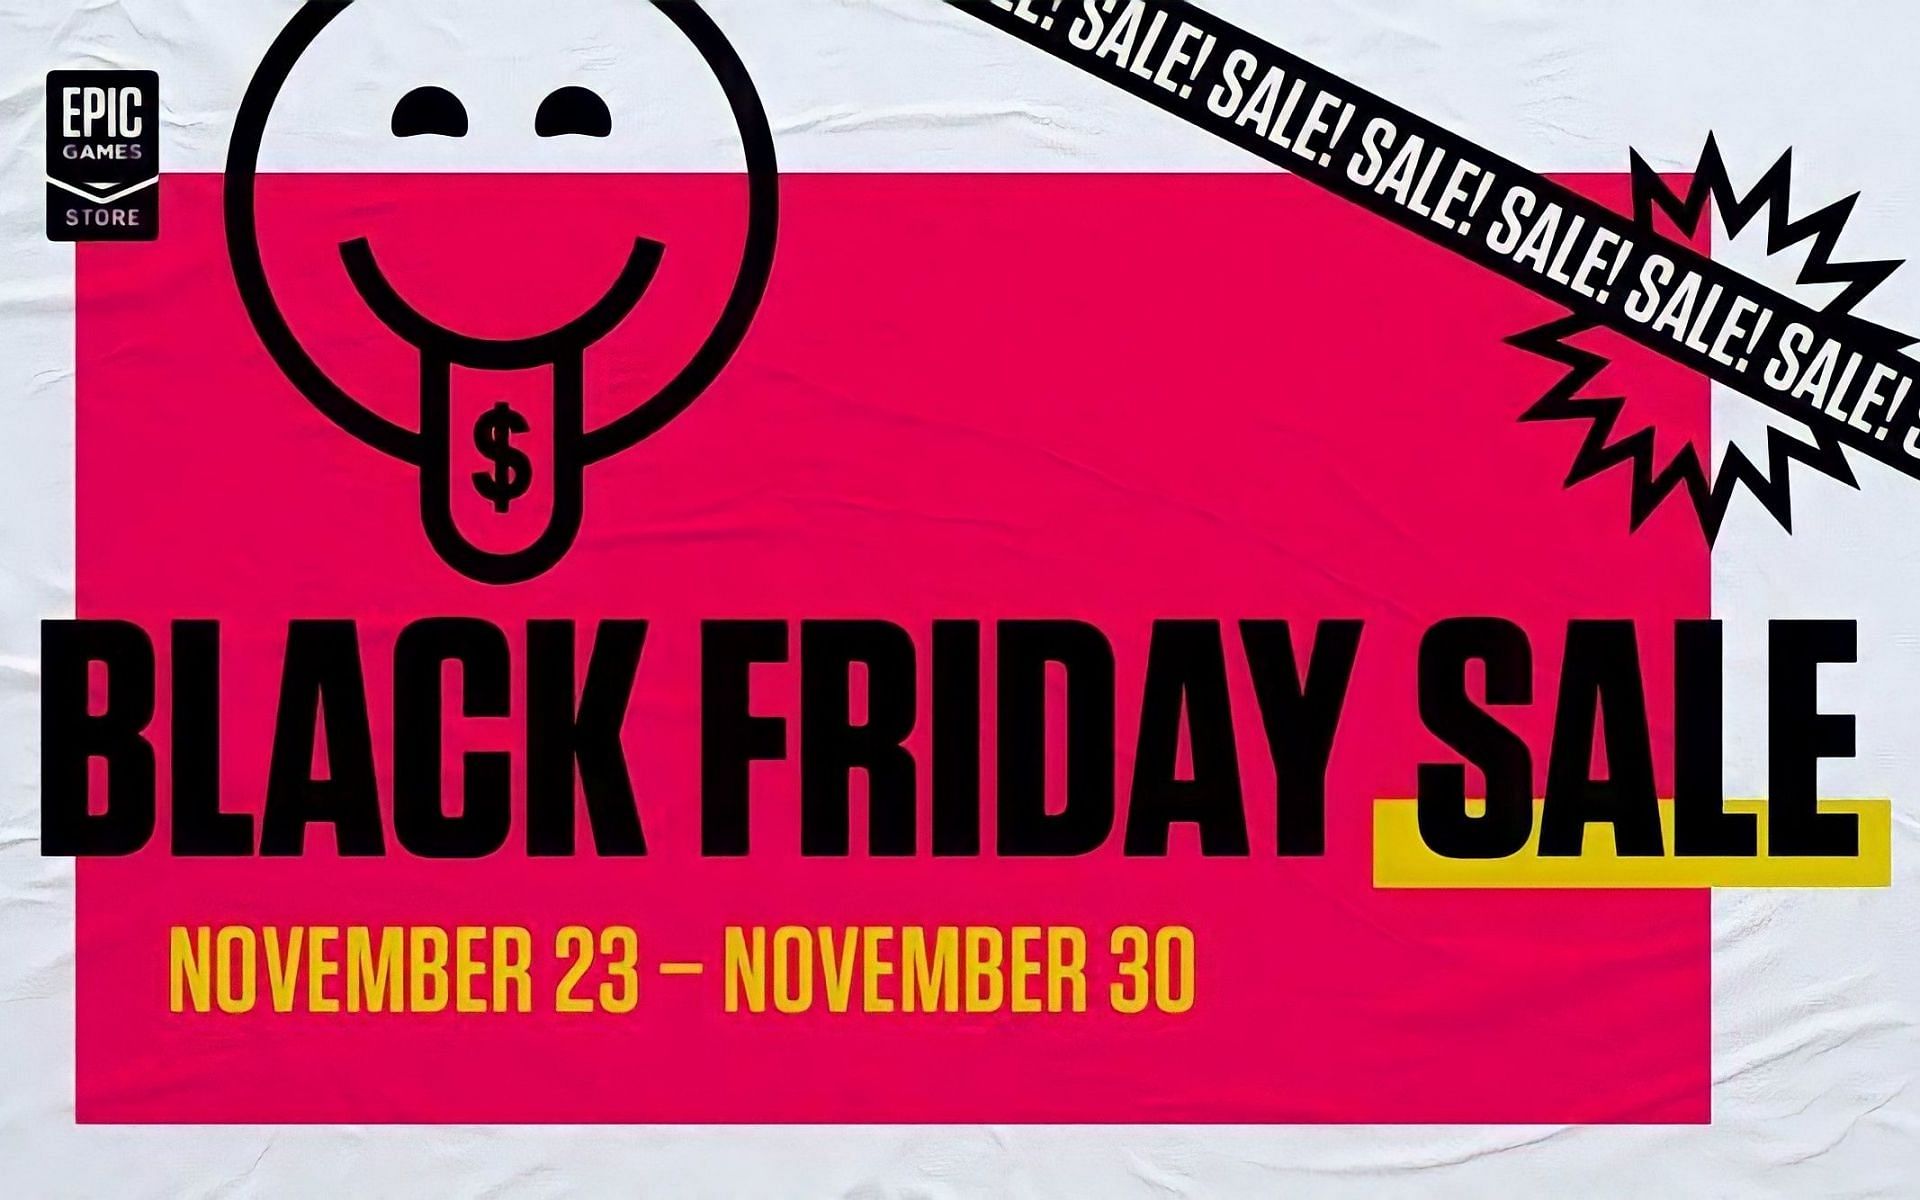 Epic Store Black Friday Sale (image via Epic Store)